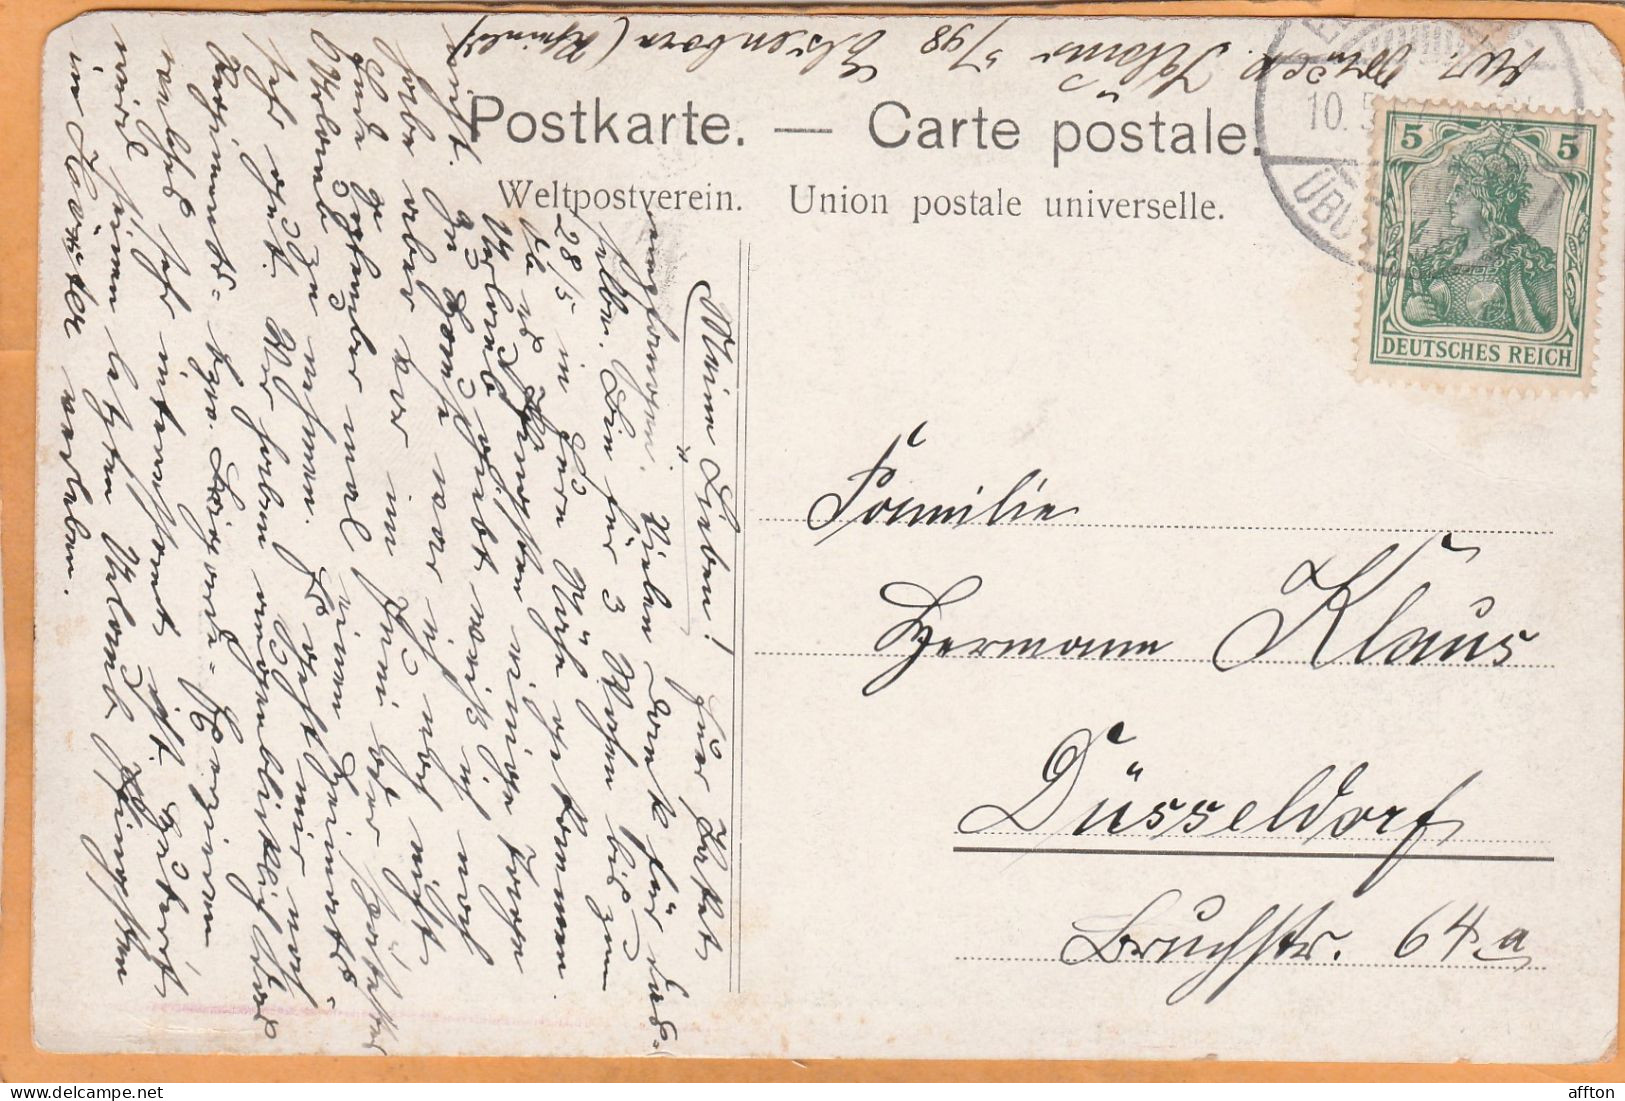 Elsenborn 1905 Postcard - Büllingen